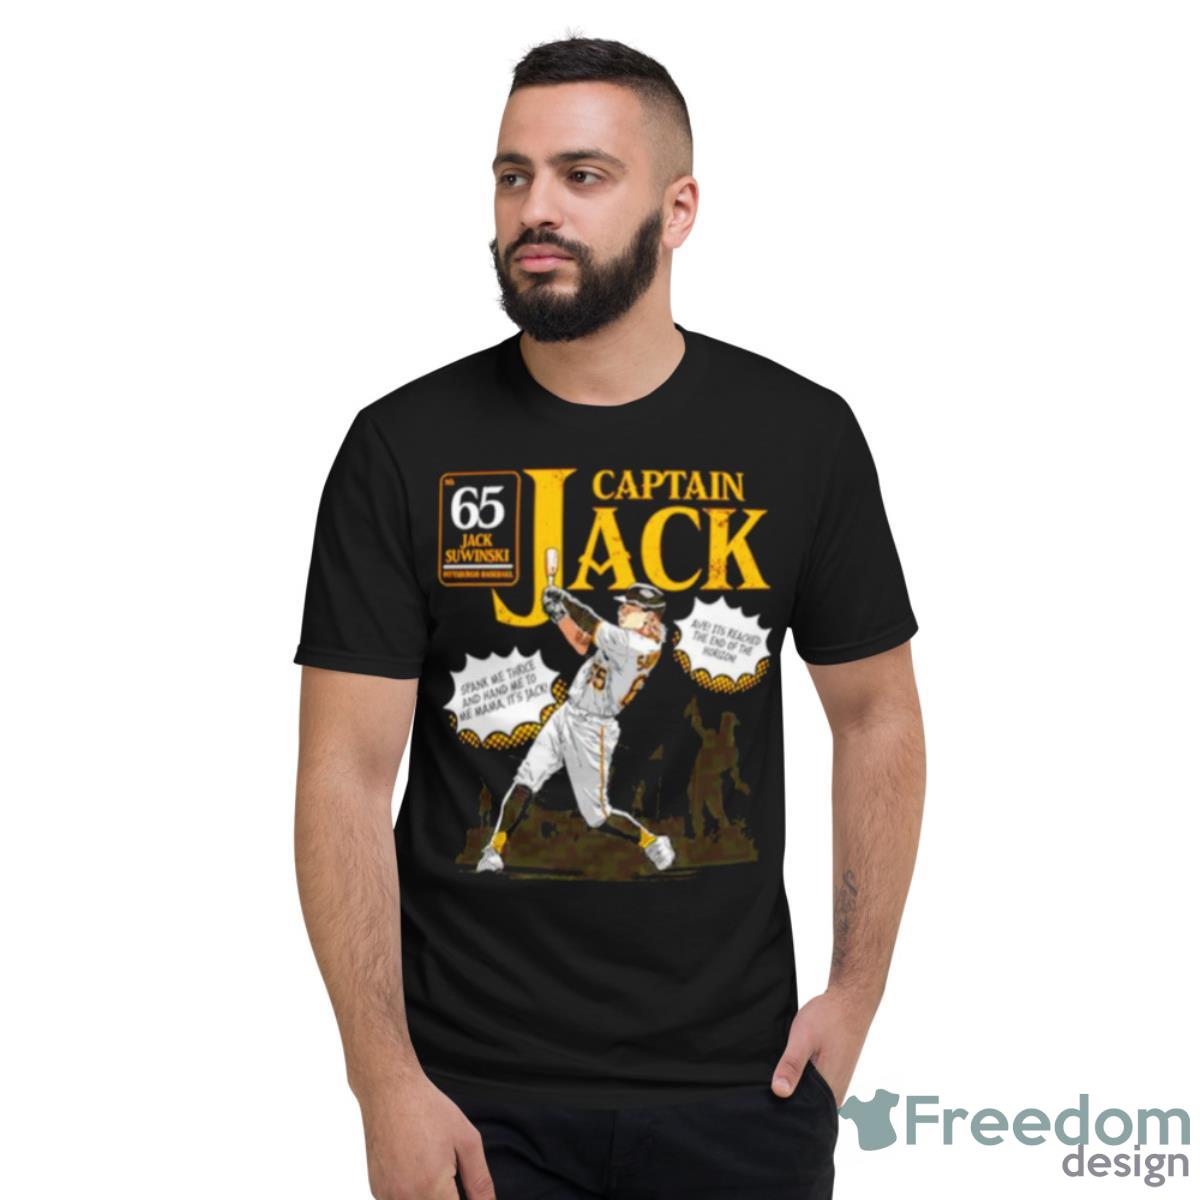 Captain Jack Suwinski Spank Me Thrice And Hand Me To Me Mama It's Jack Shirt  - Freedomdesign